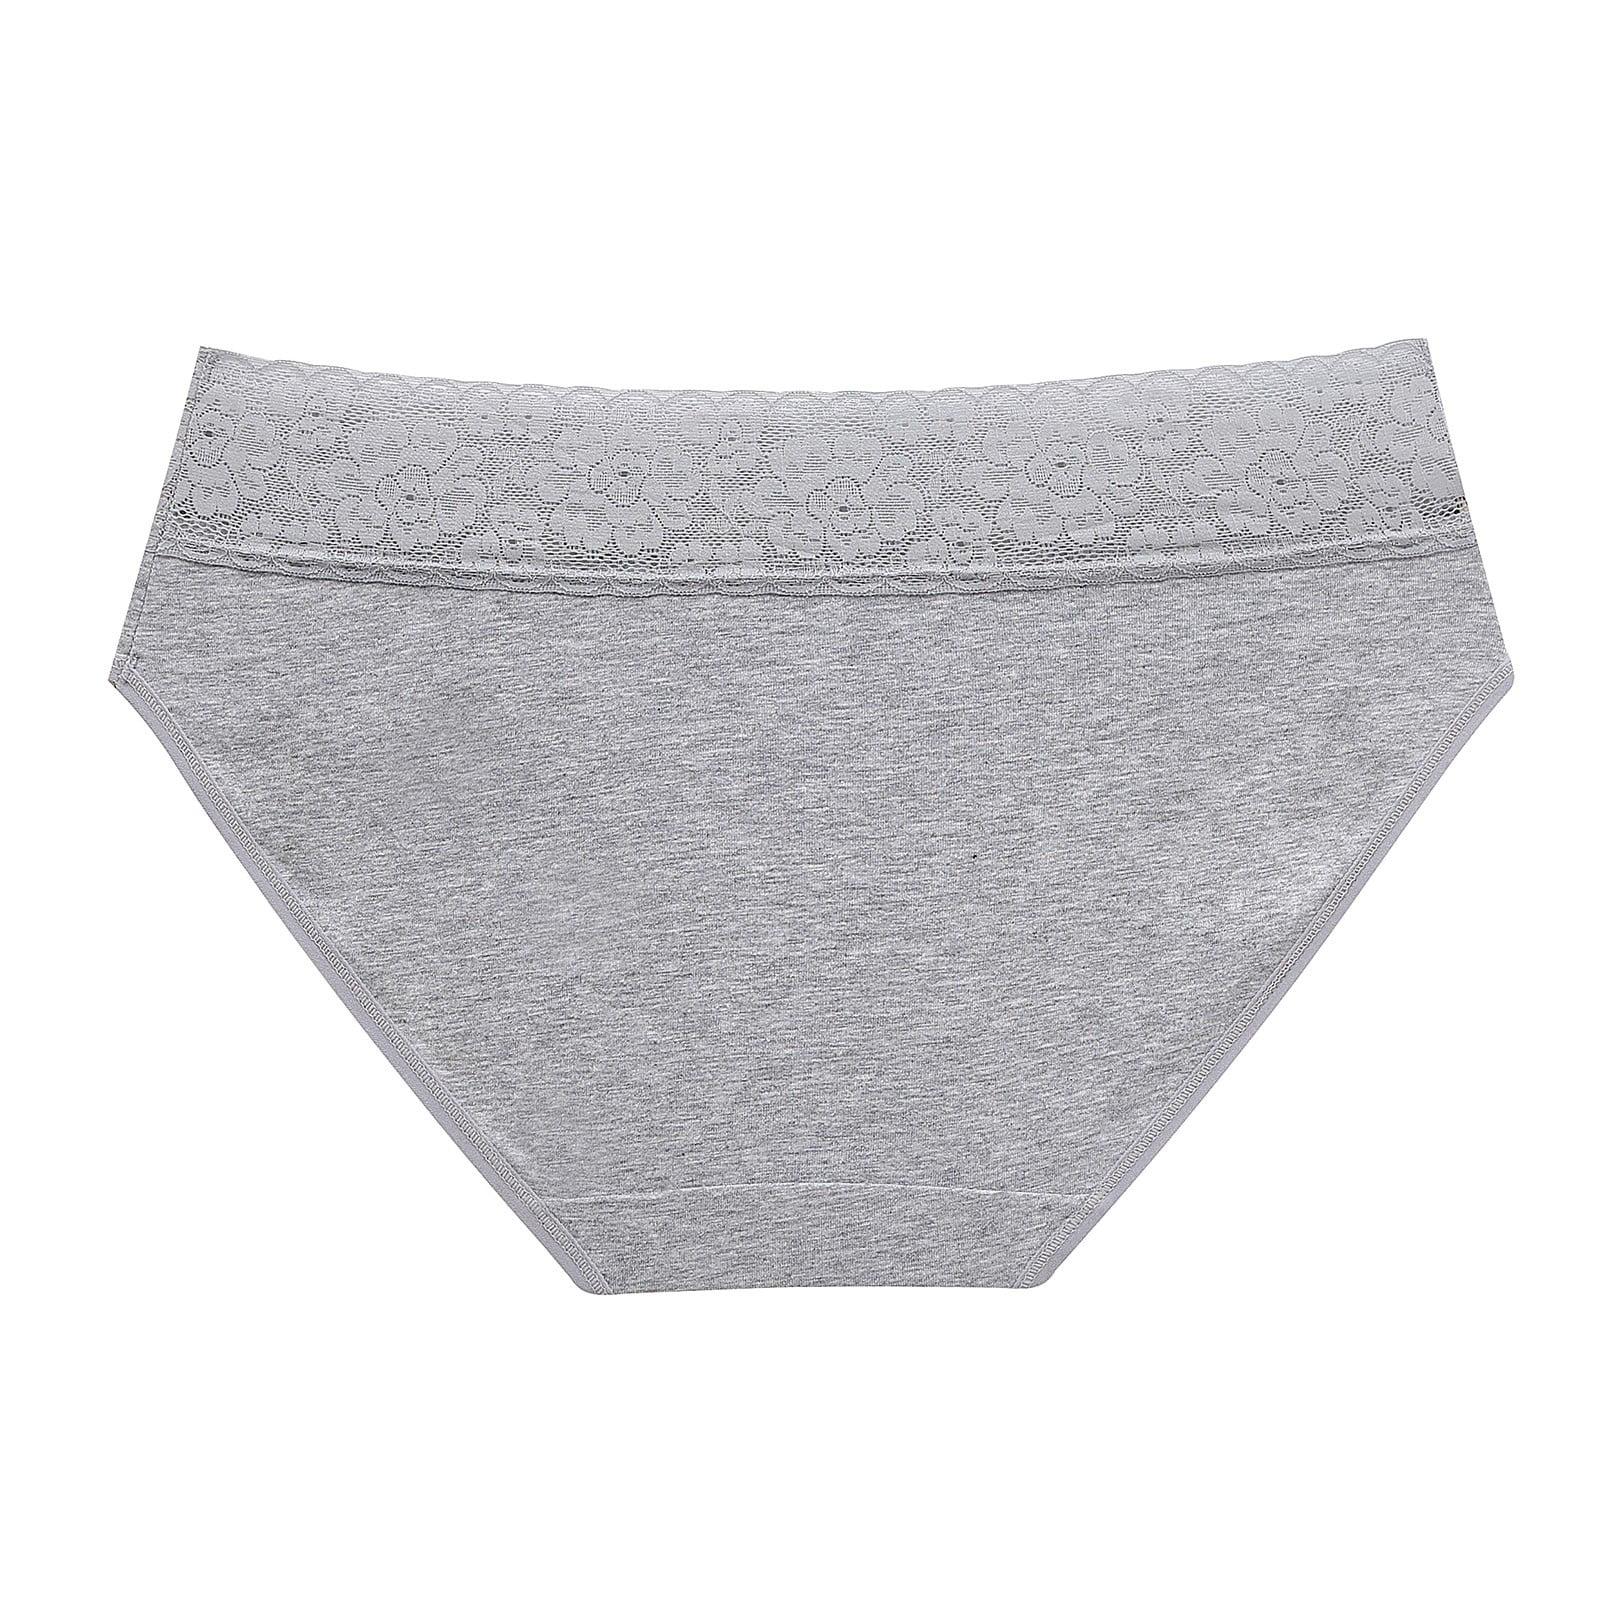 eczipvz Lingerie for Women Naughty Women Silk Panties Cotton Crotch Mid  Waist Seamless Breathable Lace Mesh Briefs,RD2 